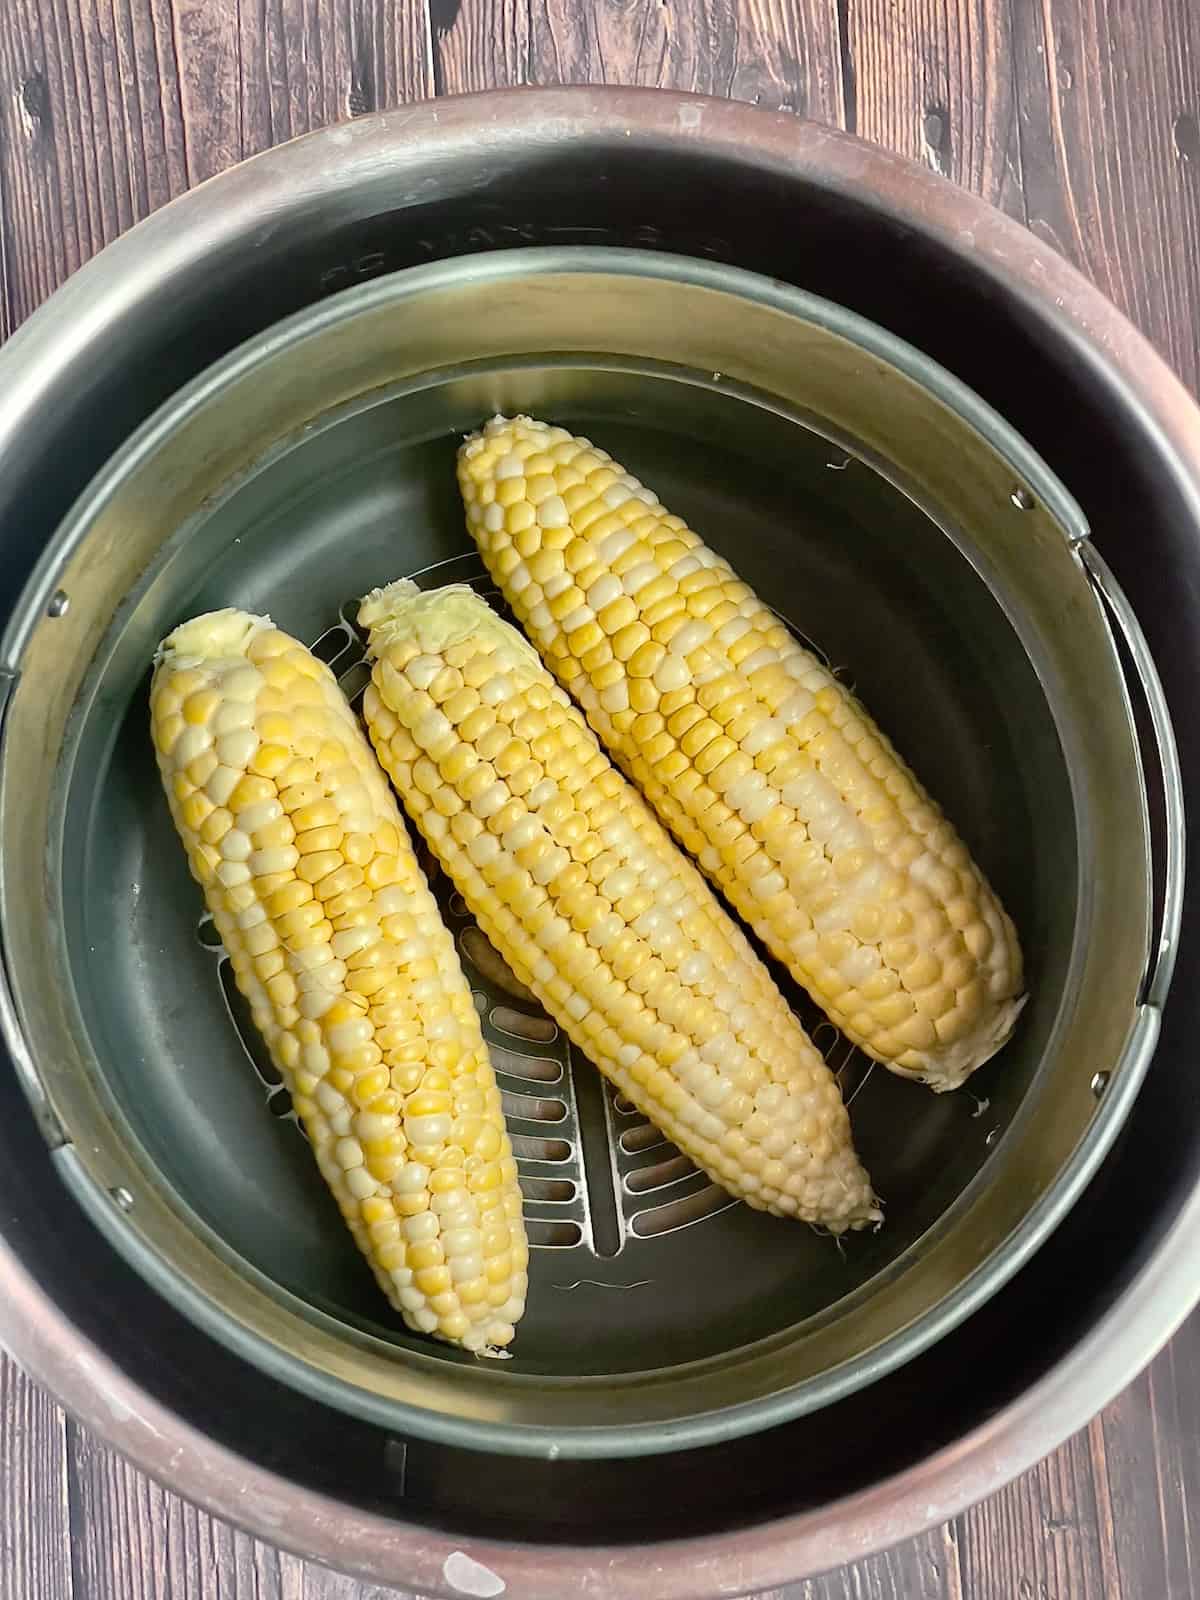 uncooked corn ears in an air fryer basket